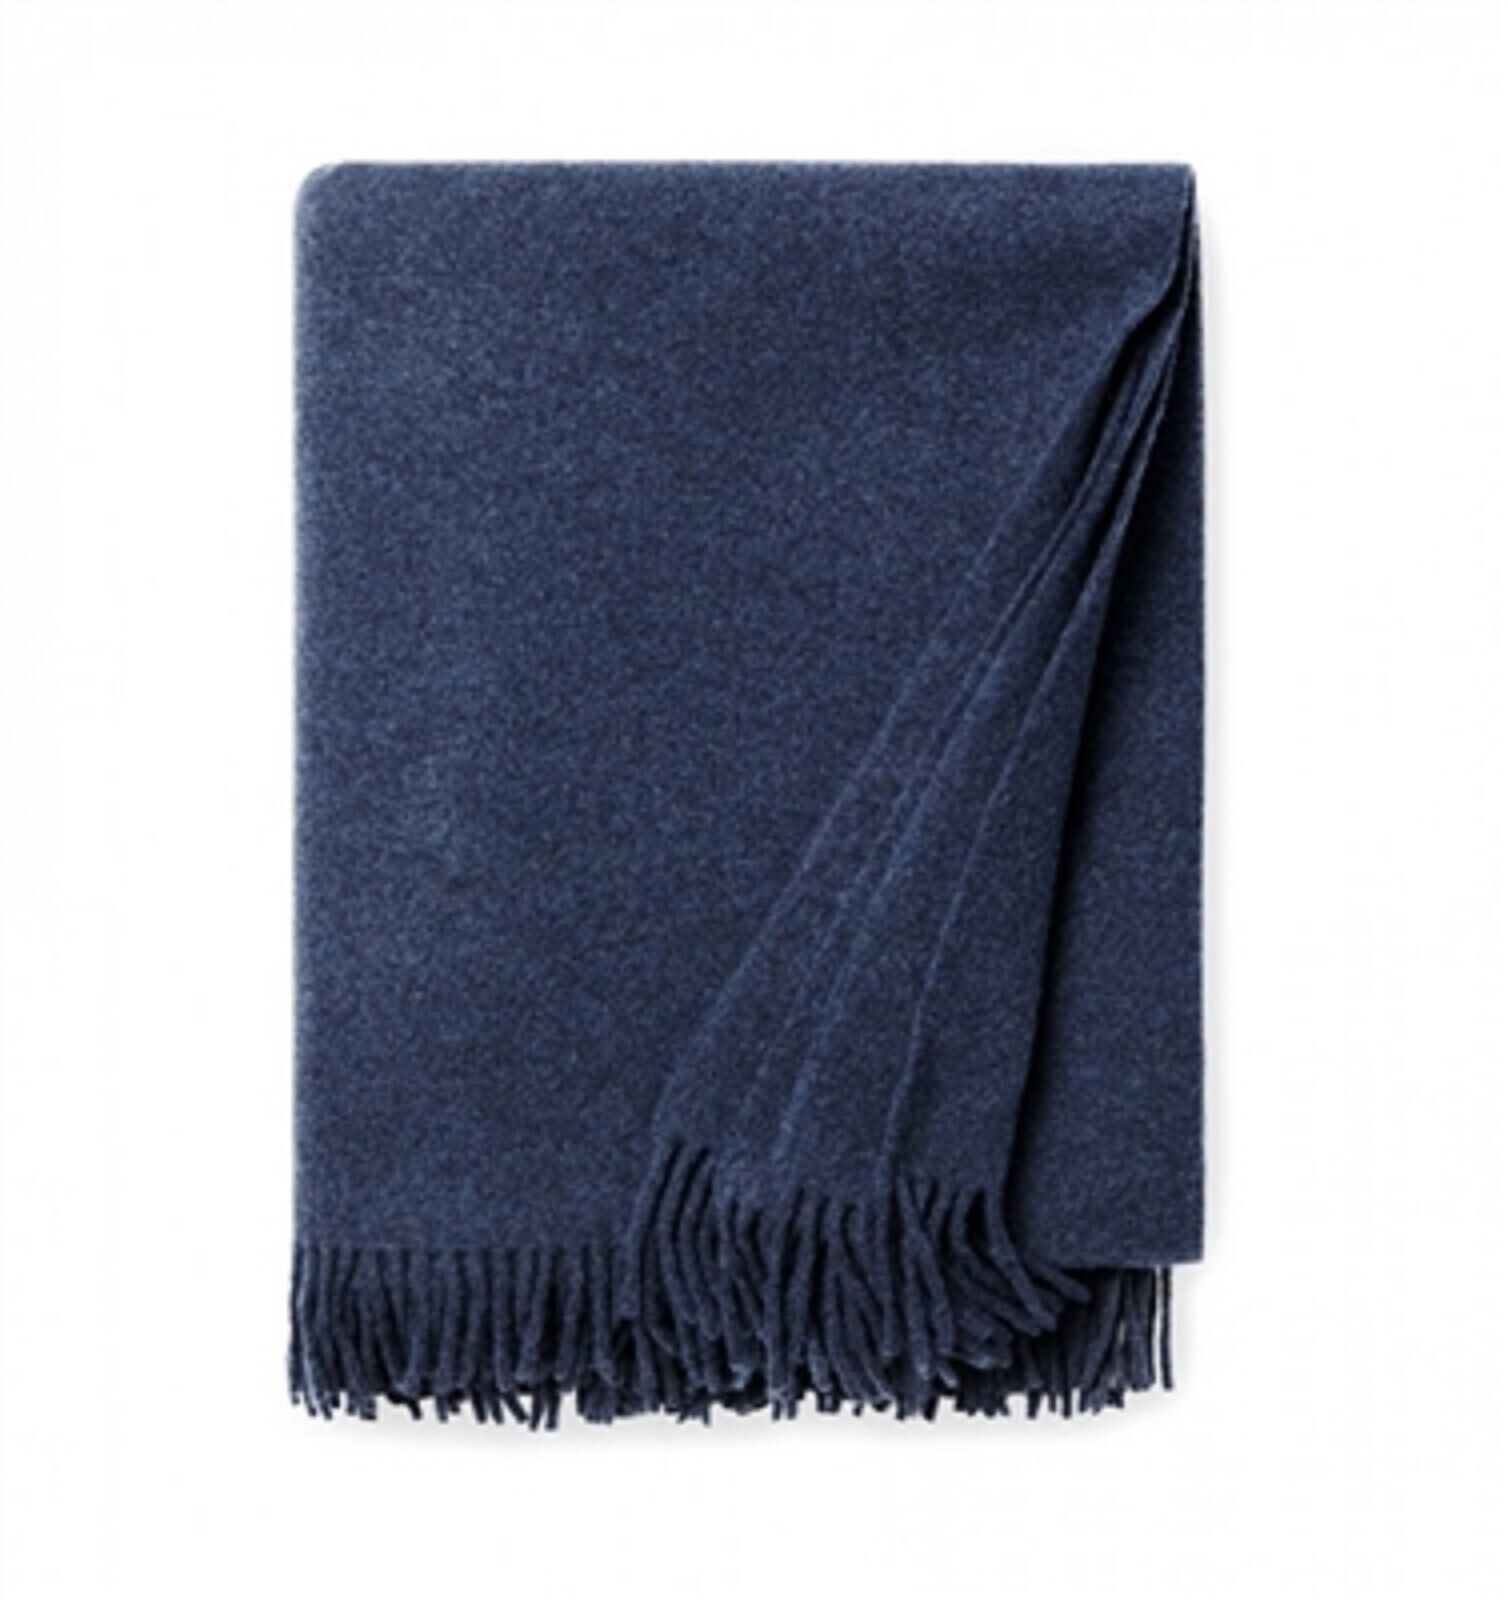 Sferra Vimmo Navy Blue Throw Blanket Fringed 100% Merino Wool Soft 51"x70" NEW - $115.00